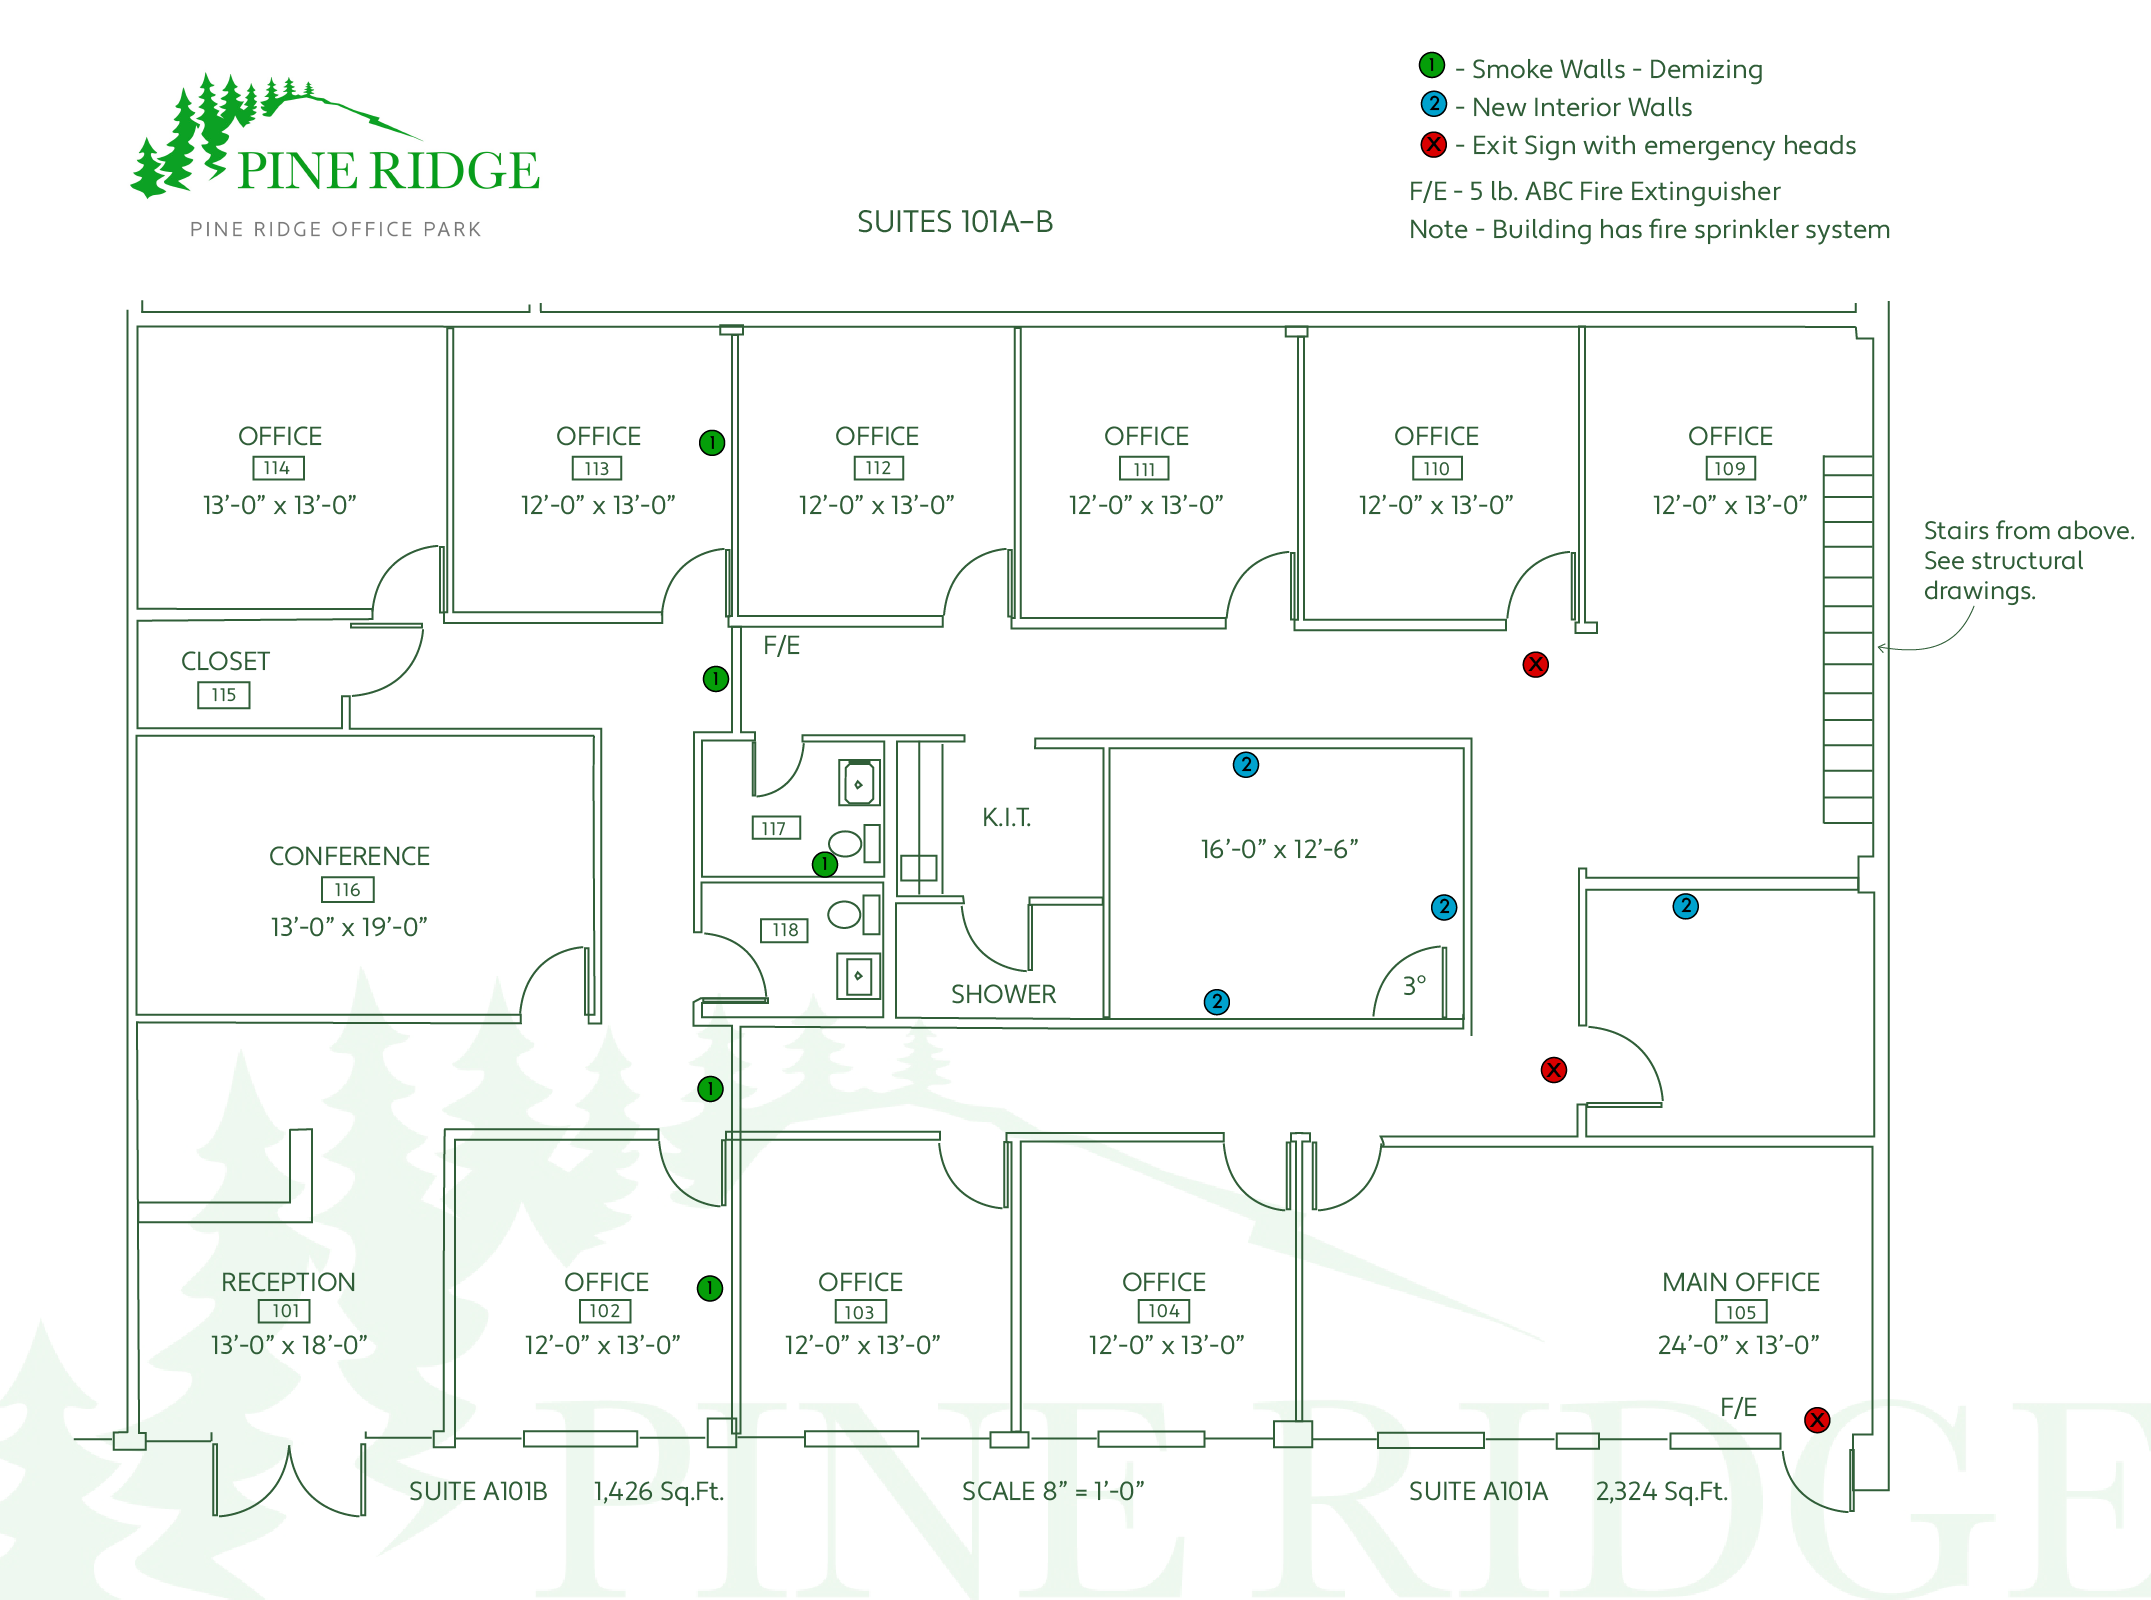 Pine Ridge Suites A101a-b Floor plan